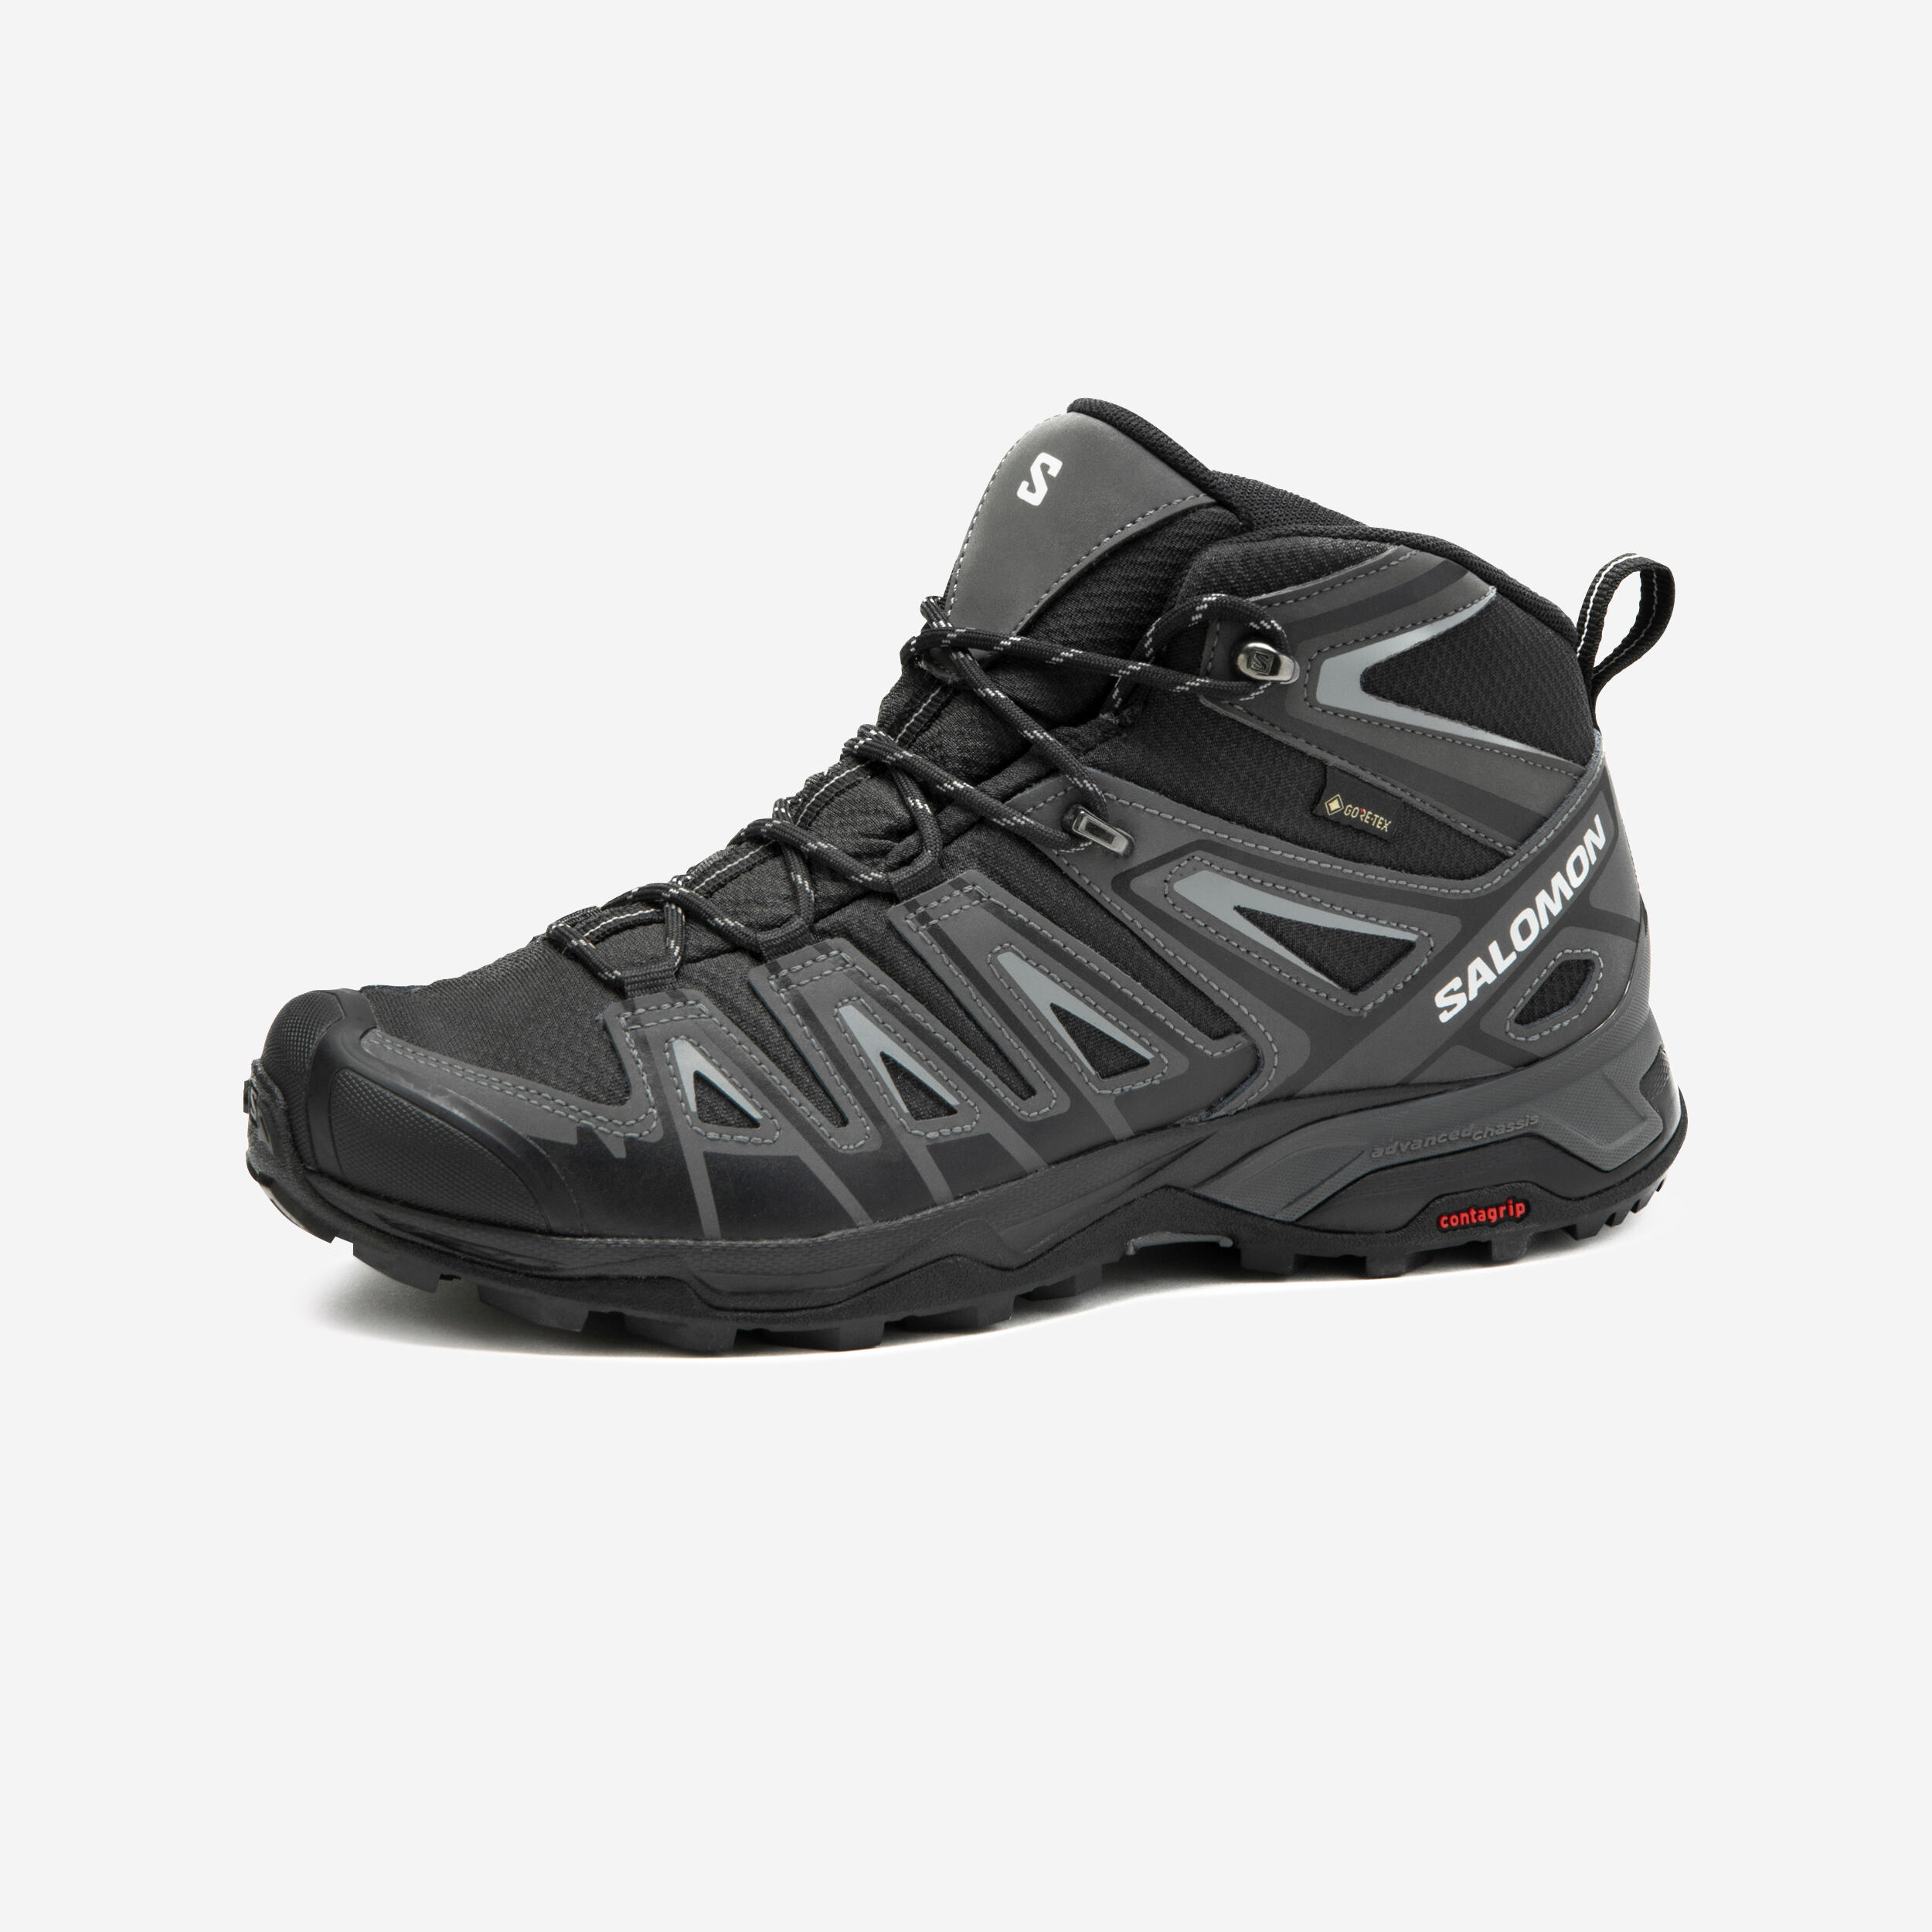 SALOMON Men’s Mountain Hiking Boots Salomon X-Ultra Pioneer GoreTex Mid